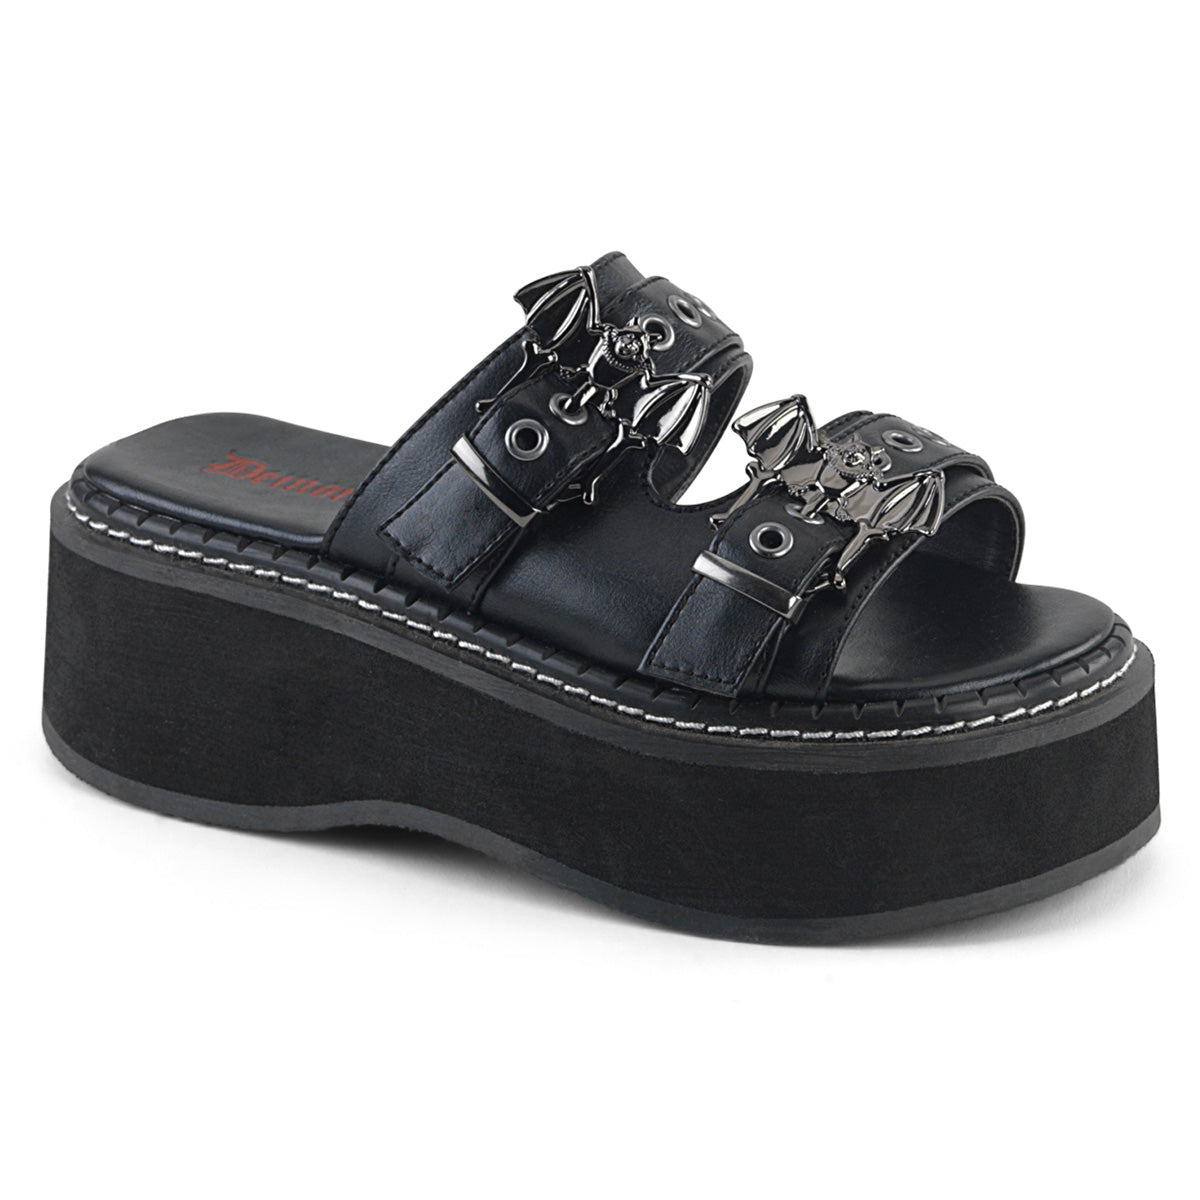 EMILY-100 Alternative Footwear Demonia Women's Sandals Blk Vegan Leather